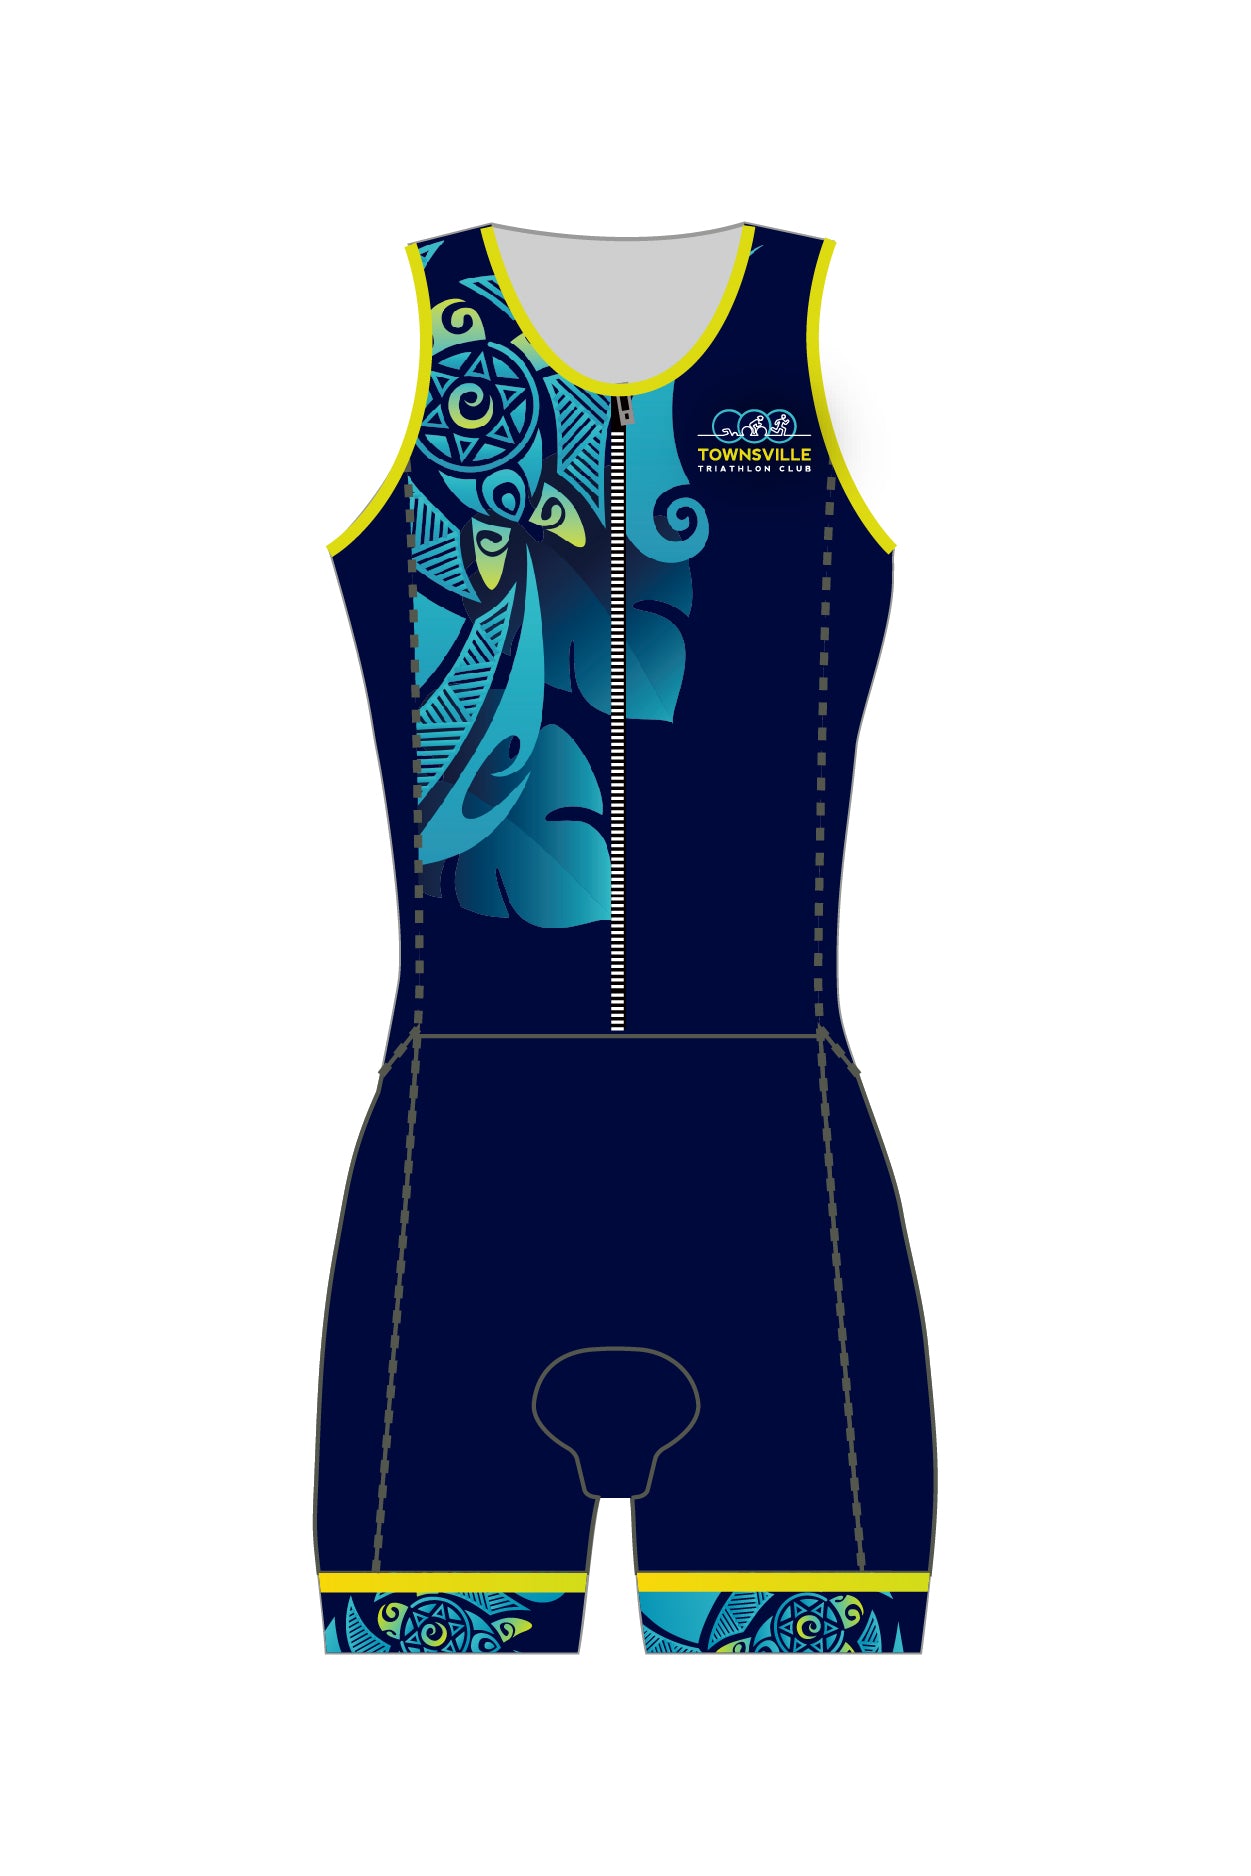 Townsville Tri Club Junior Zip Tri Suit